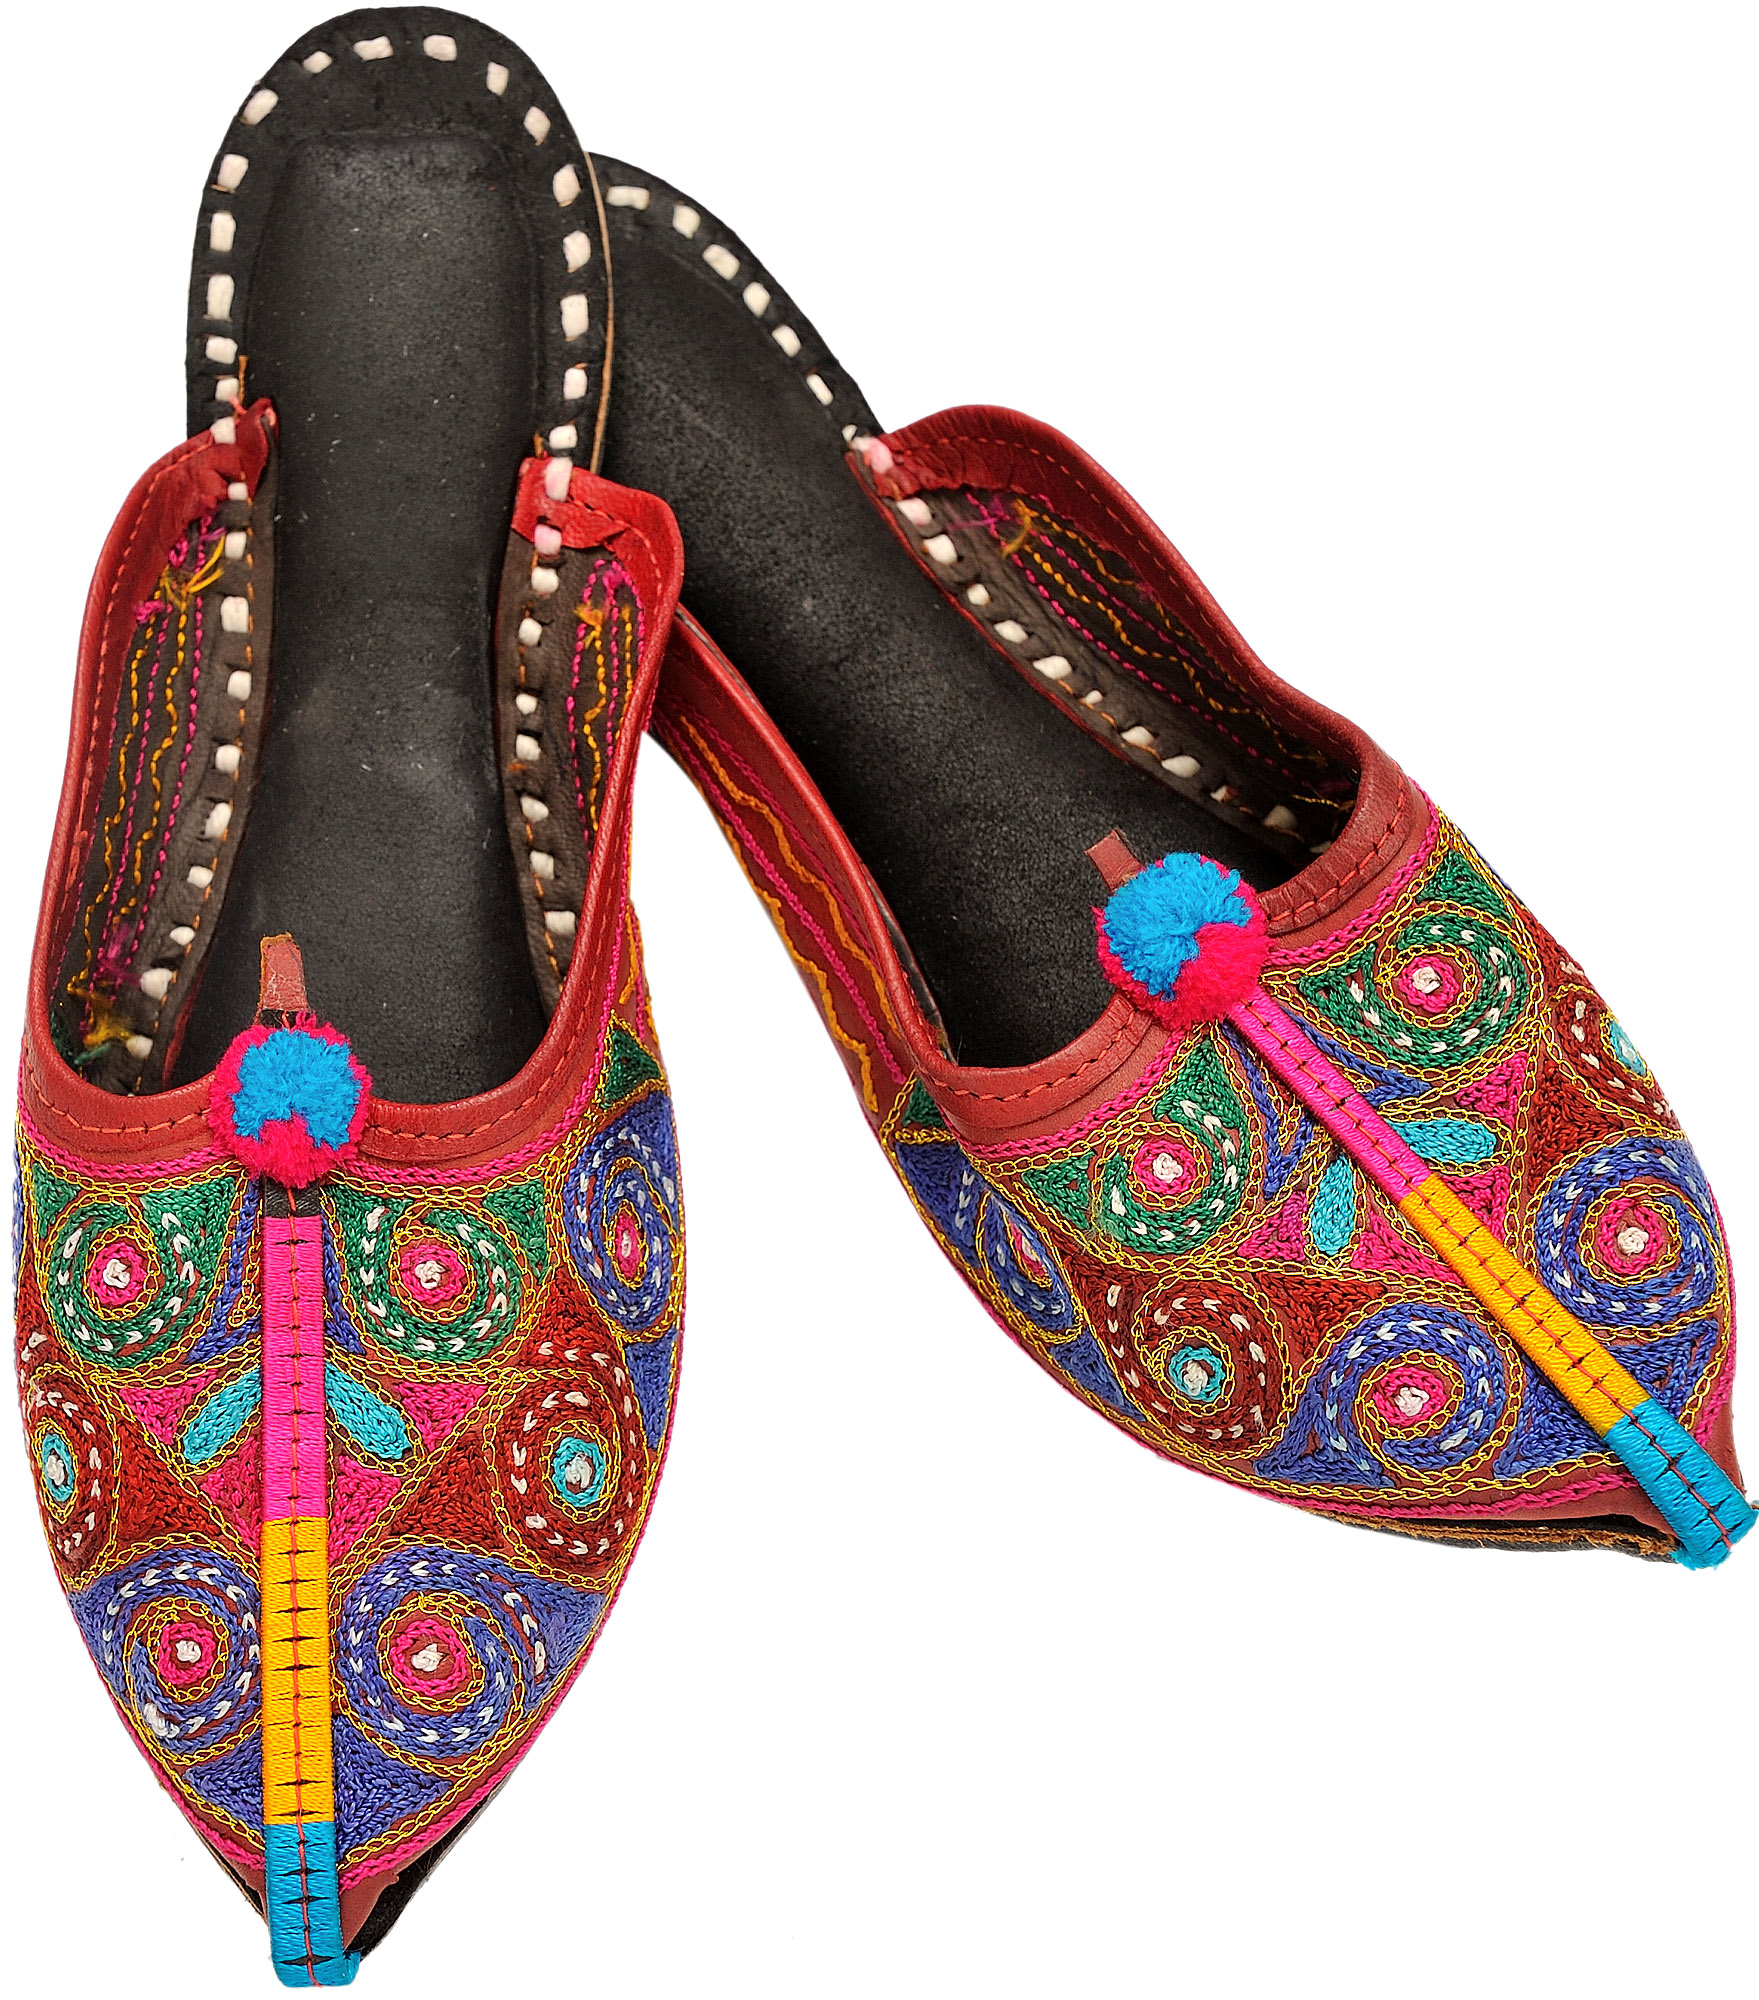 https://www.exoticindia.com/footwear/sjc73.jpg